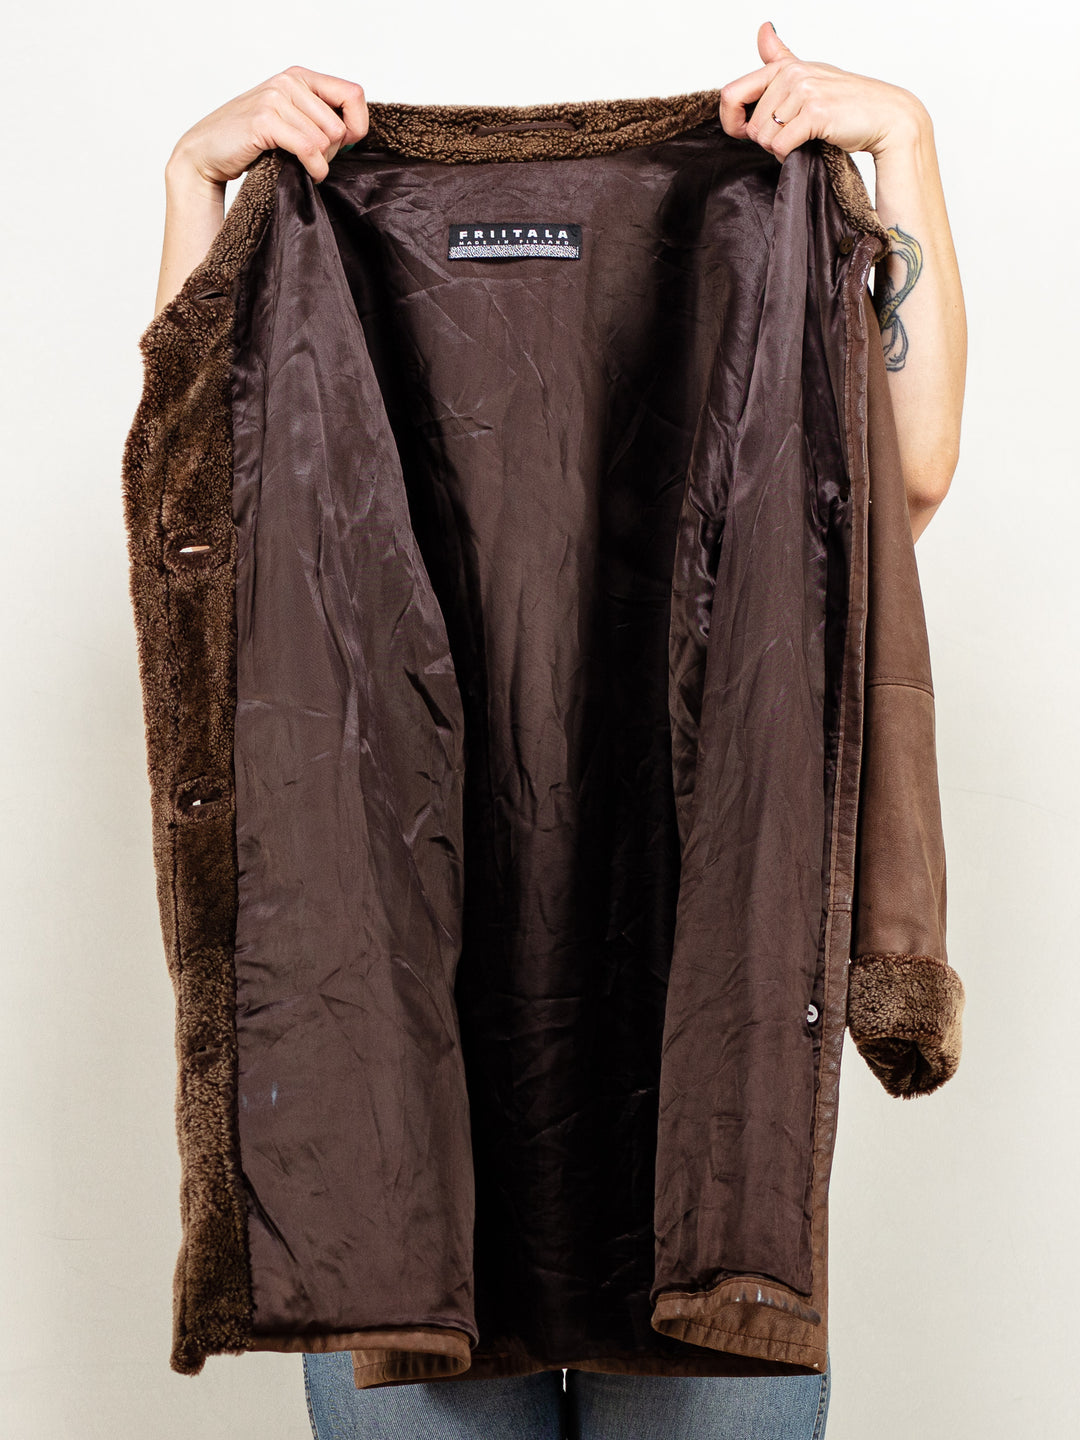 Women Sheepskin Coat 90's vintage brown winter outerwear warm overcoat long jacket penny lane almost famous shearling size extra large XL